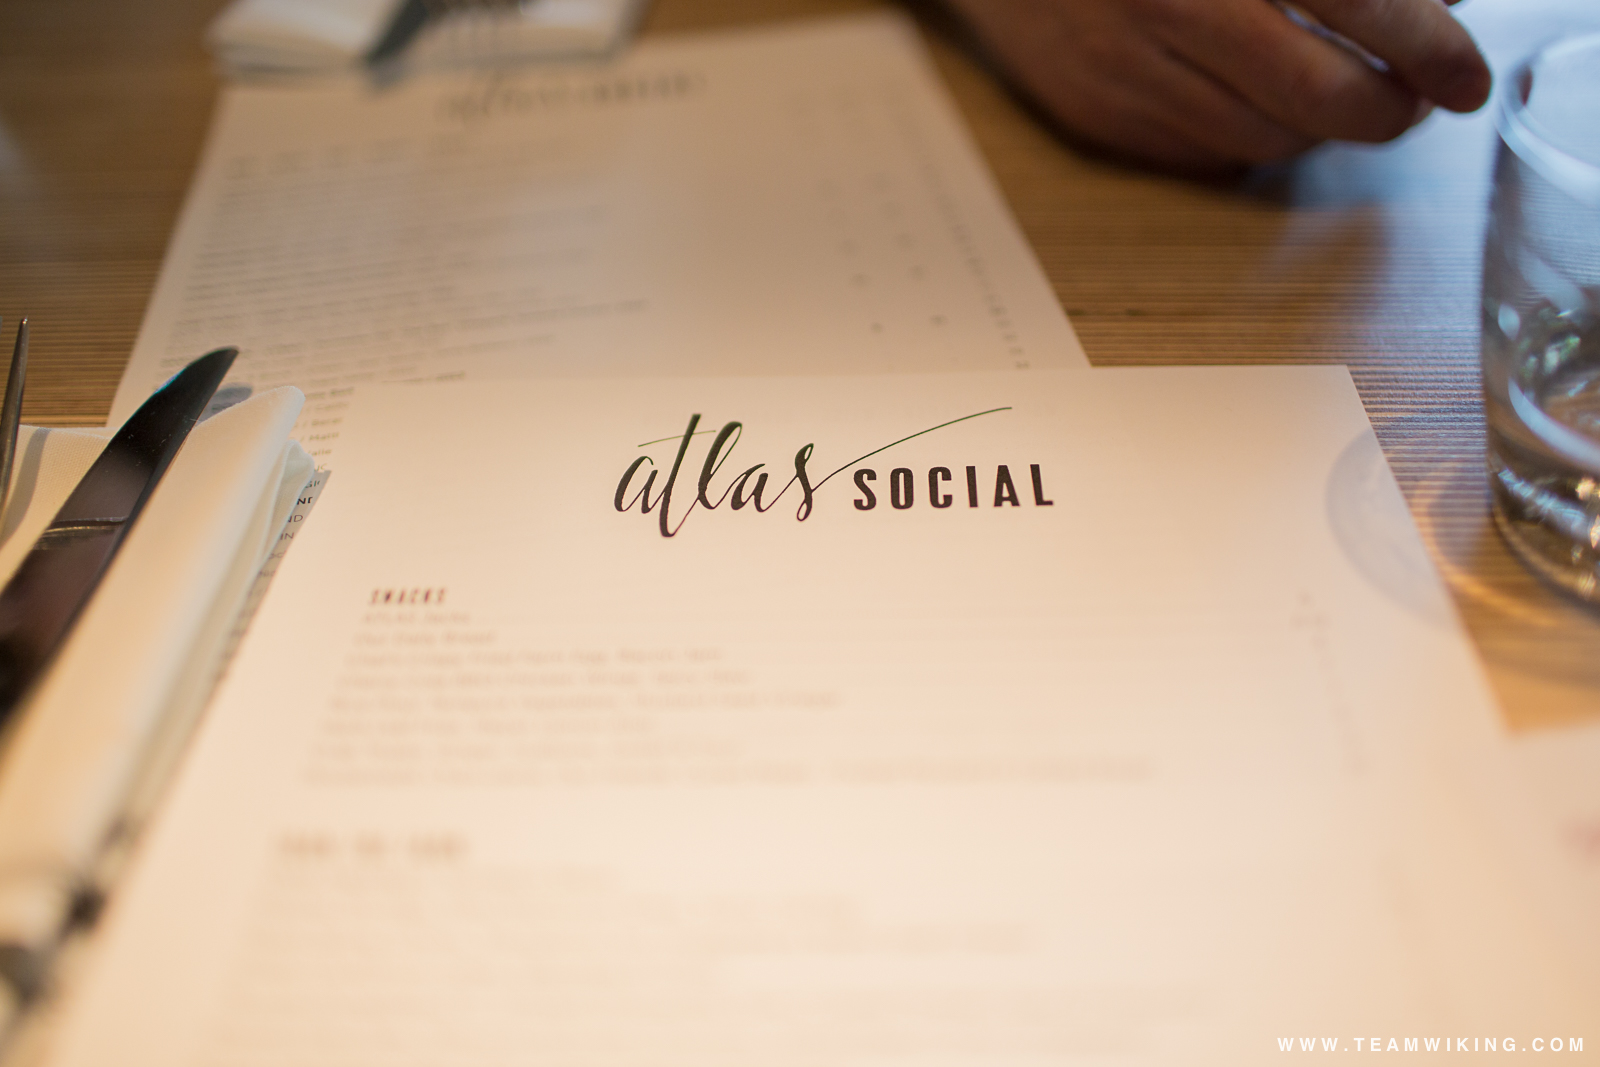 atlas social in downtown Napa, California